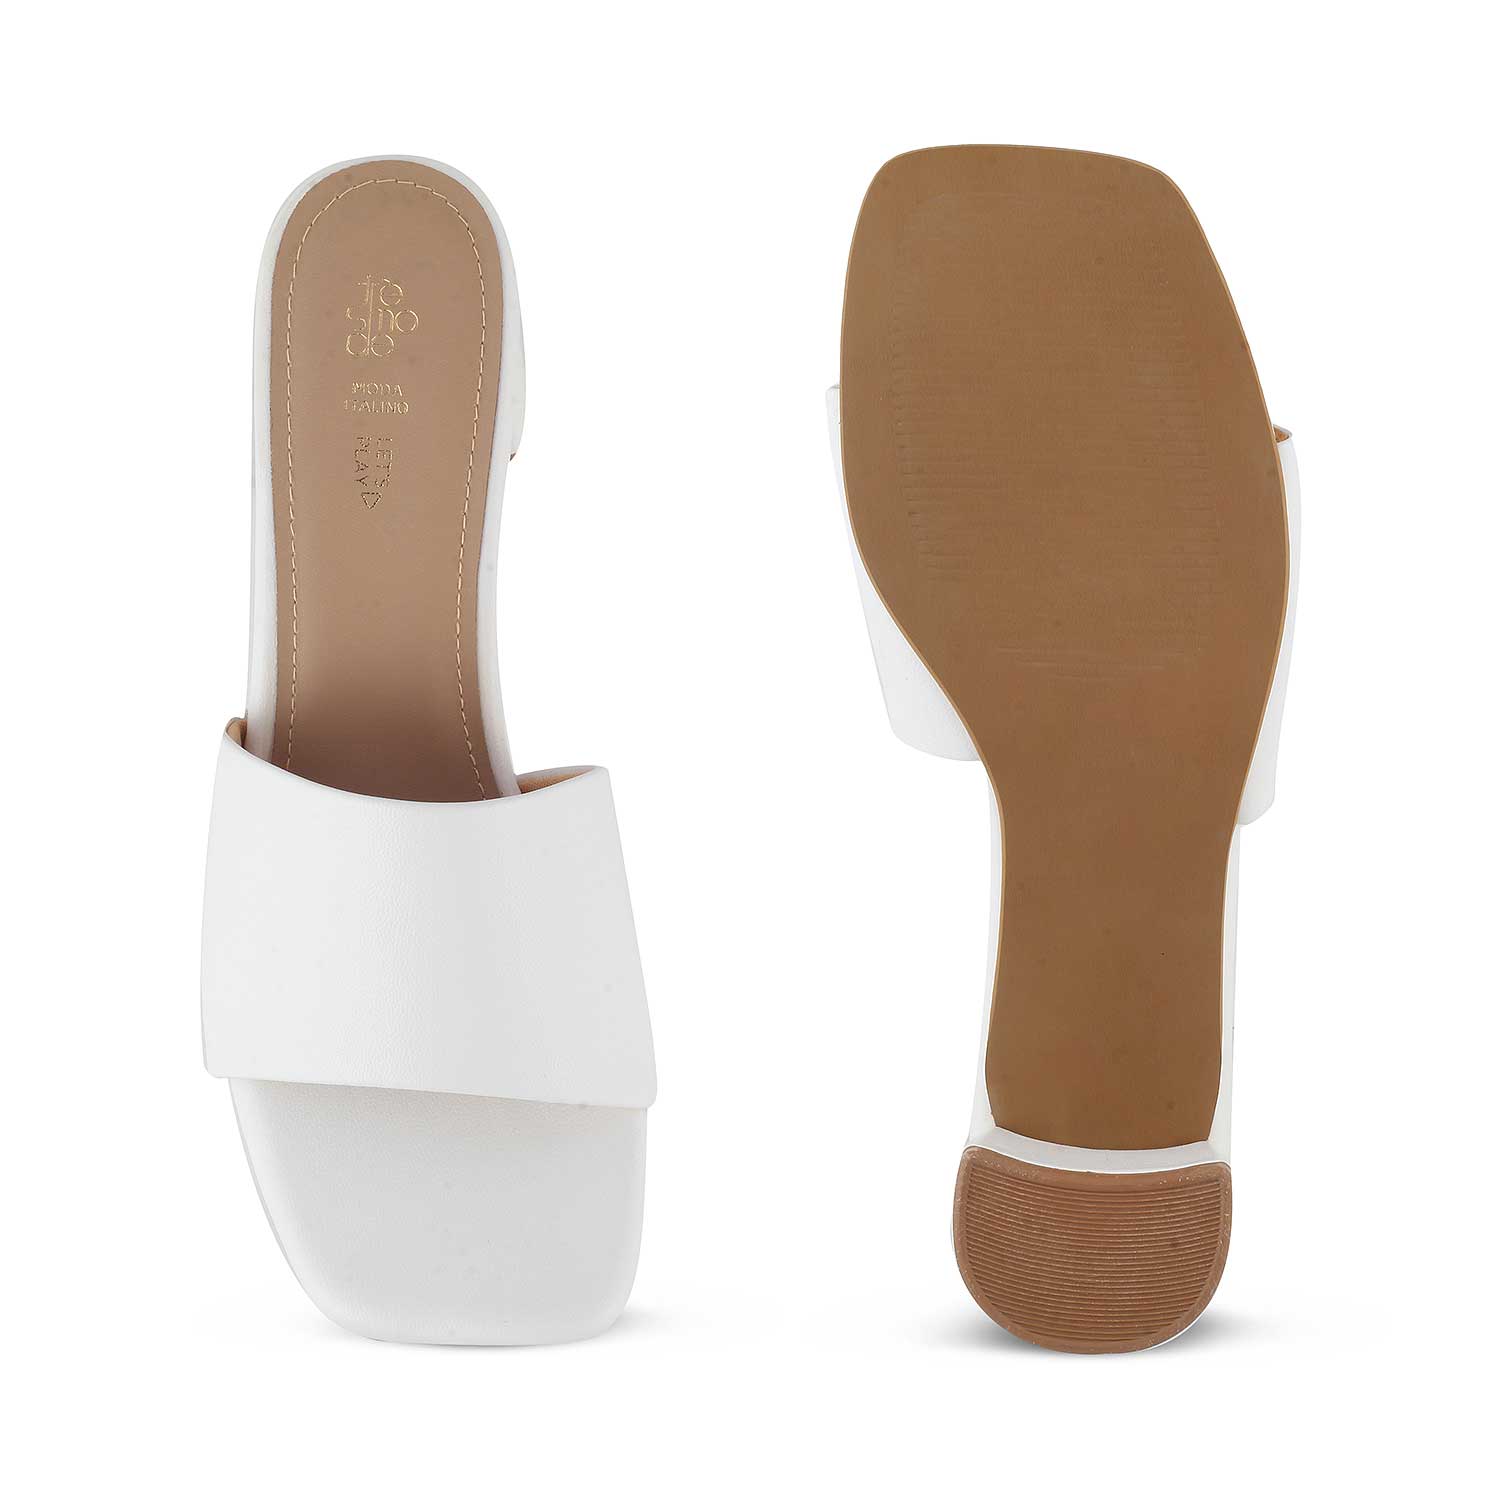 The Bariz White Women's Casual Block Heel Sandals Tresmode